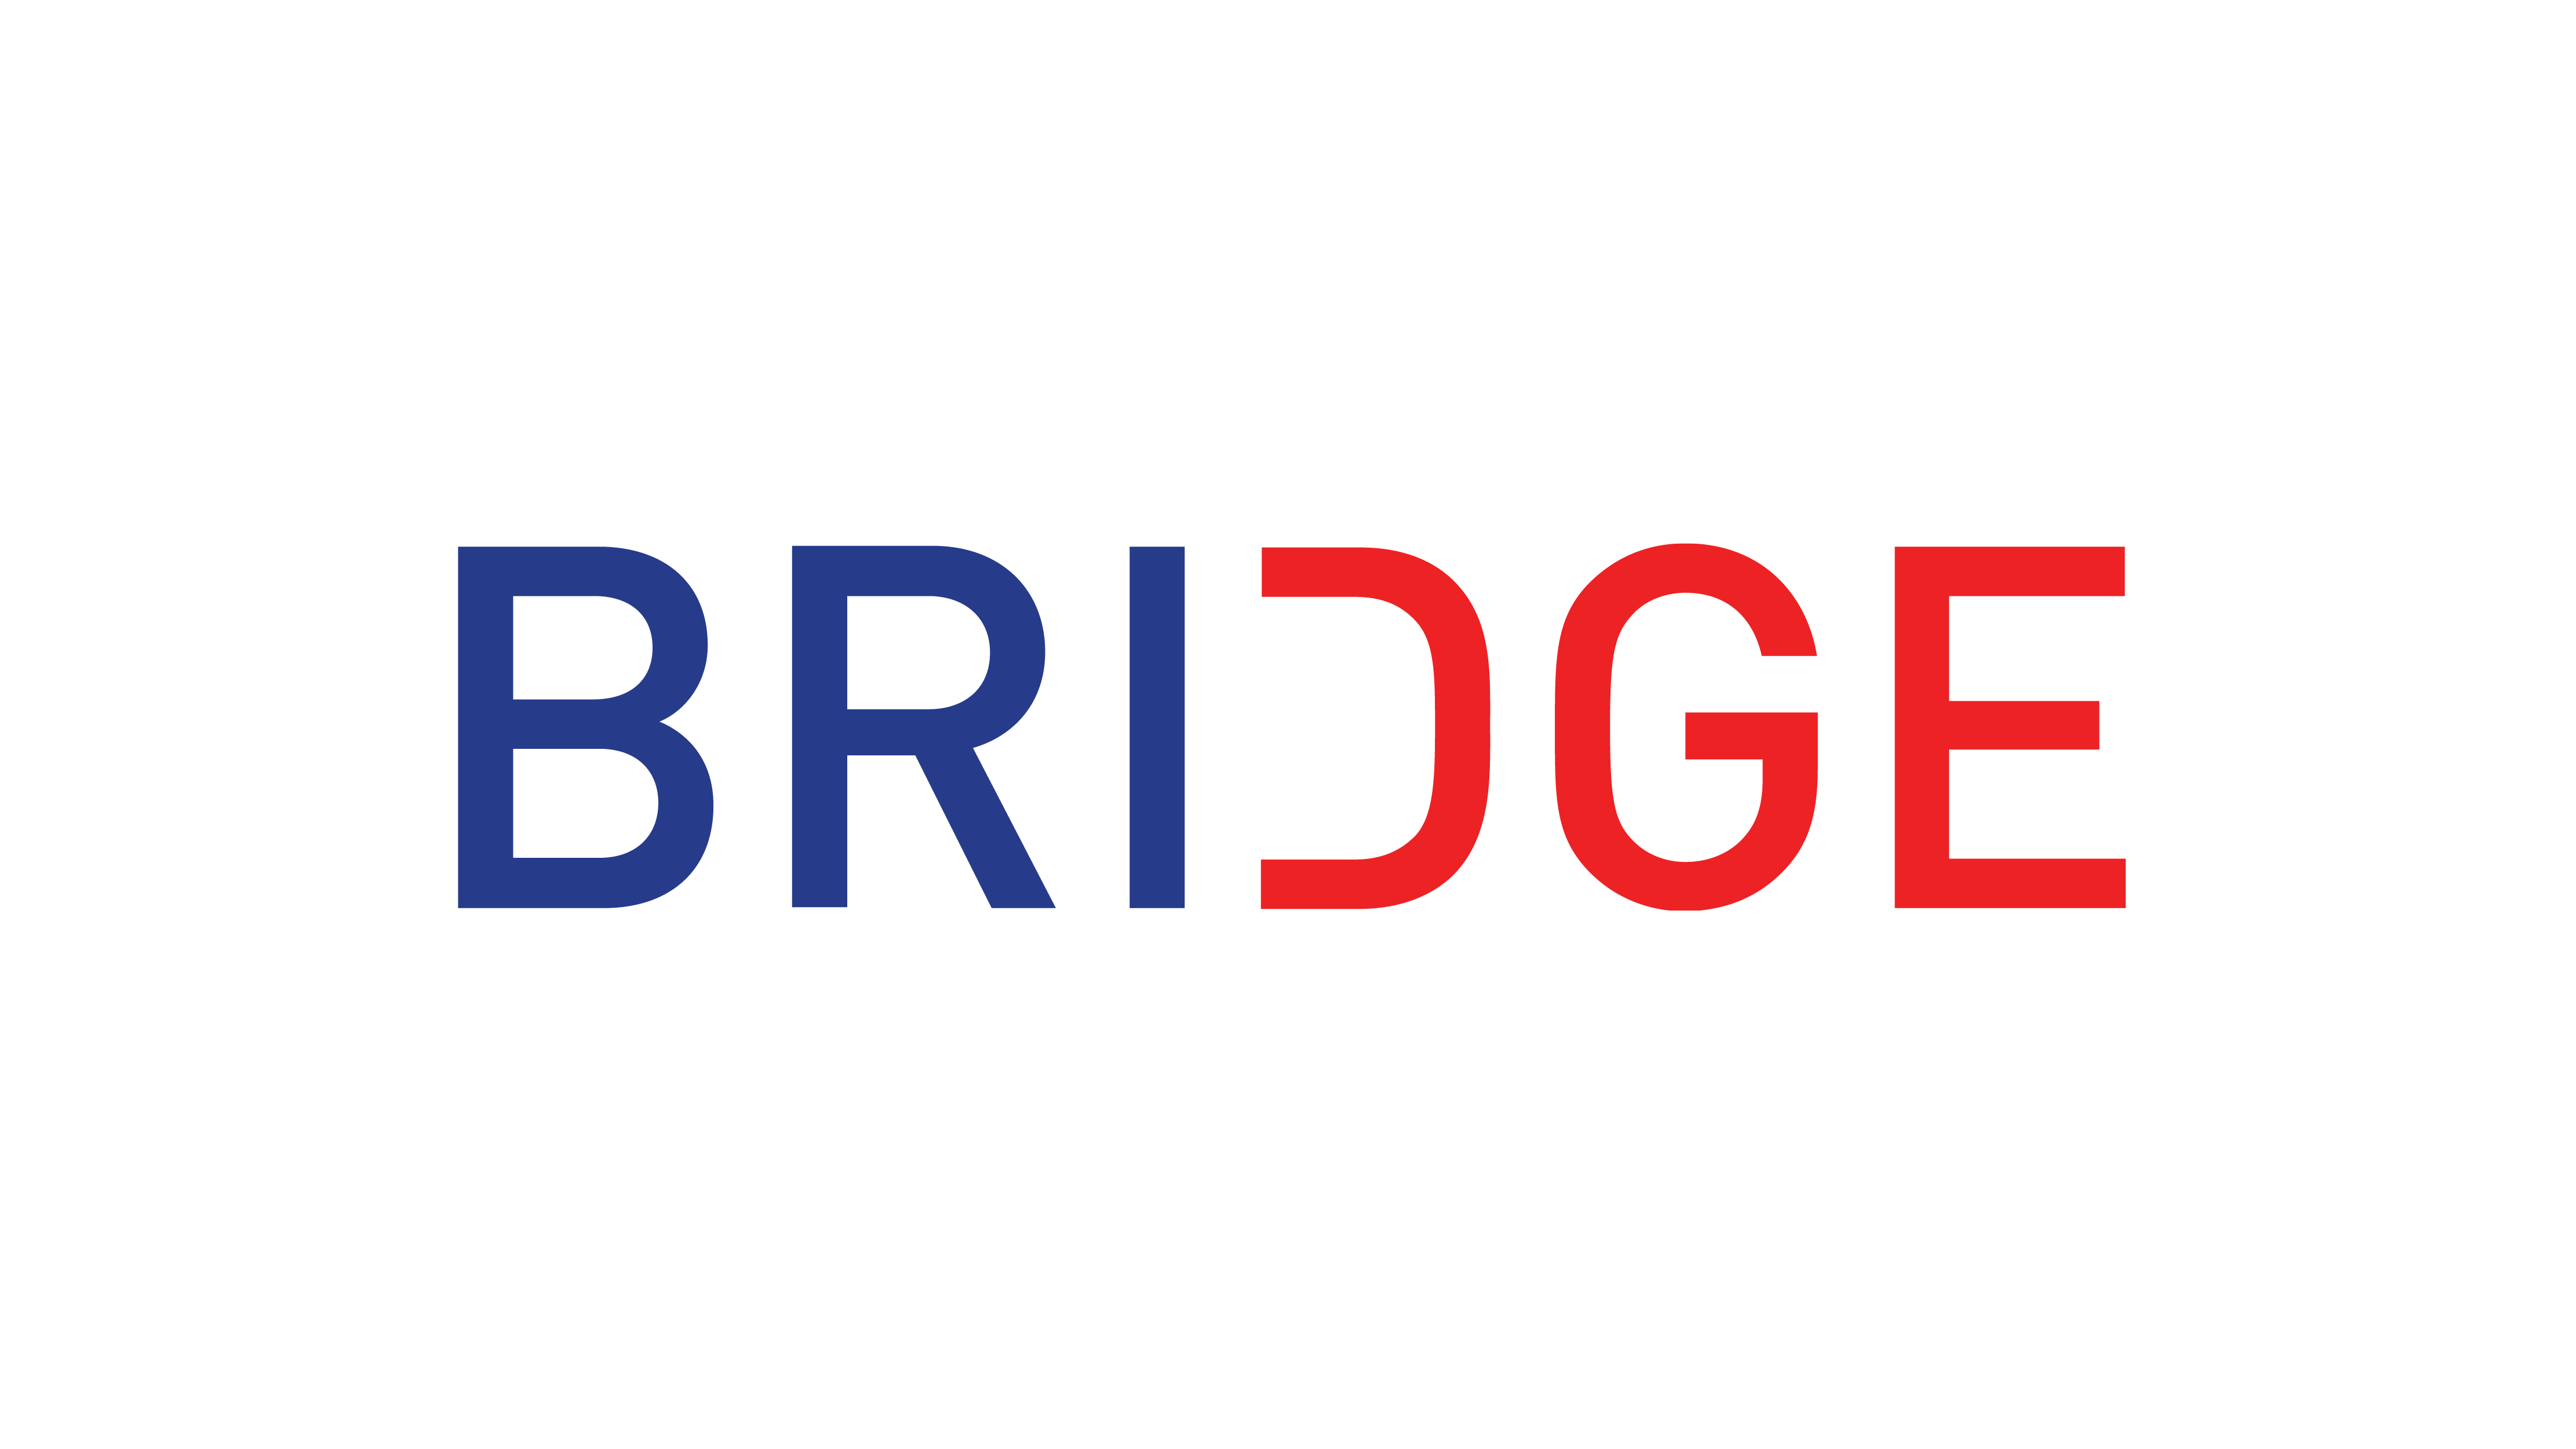 Bridge proof of concept logo